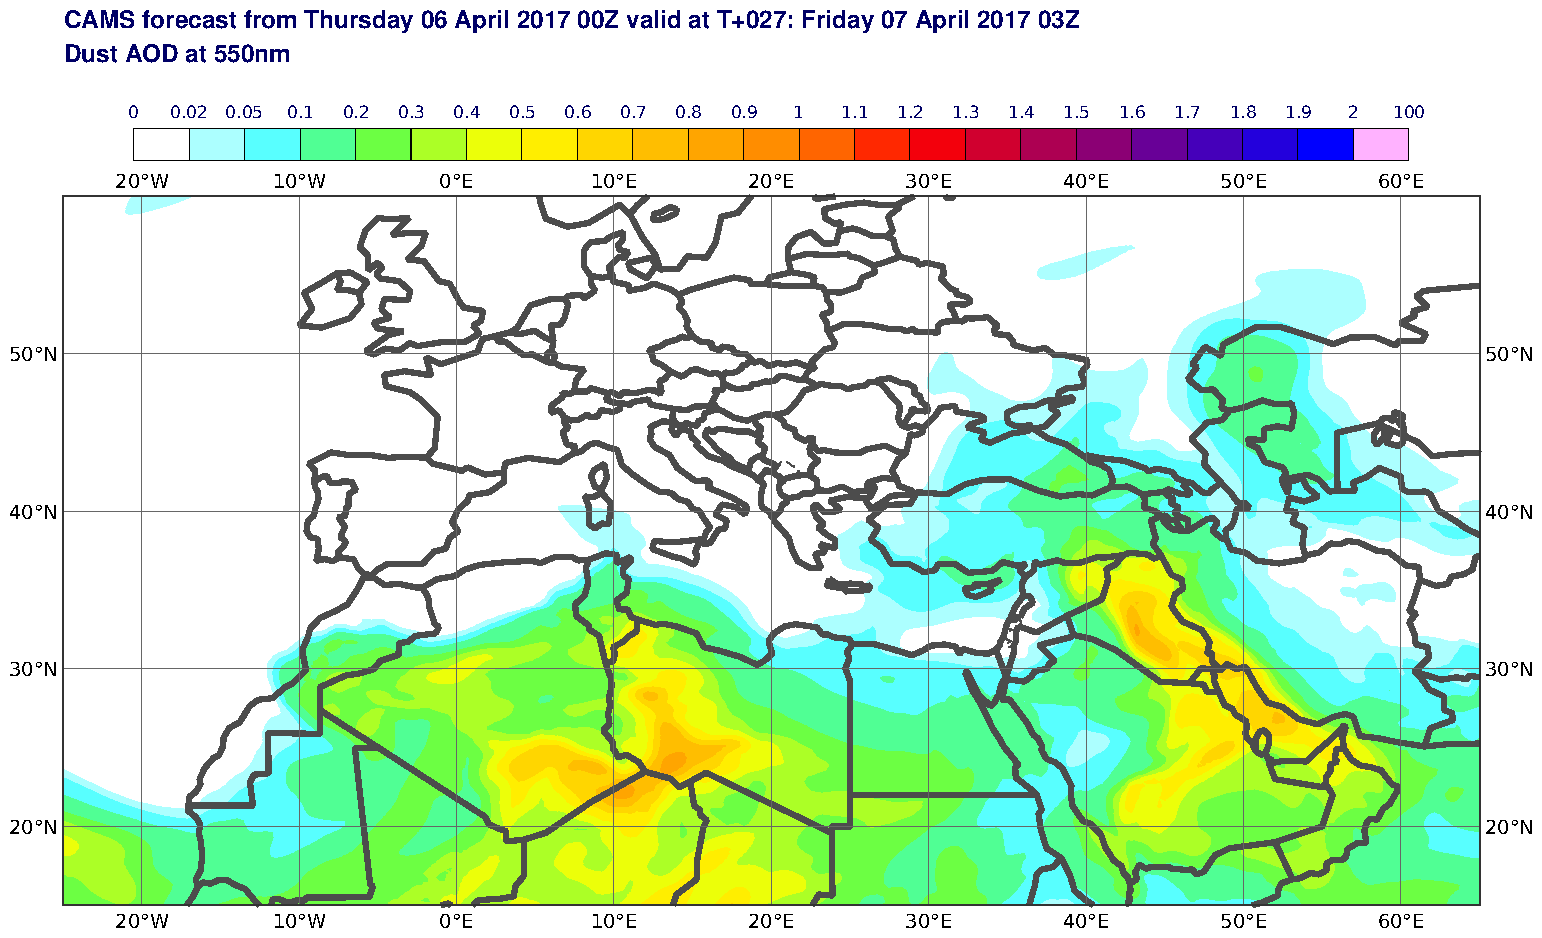 Dust AOD at 550nm valid at T27 - 2017-04-07 03:00